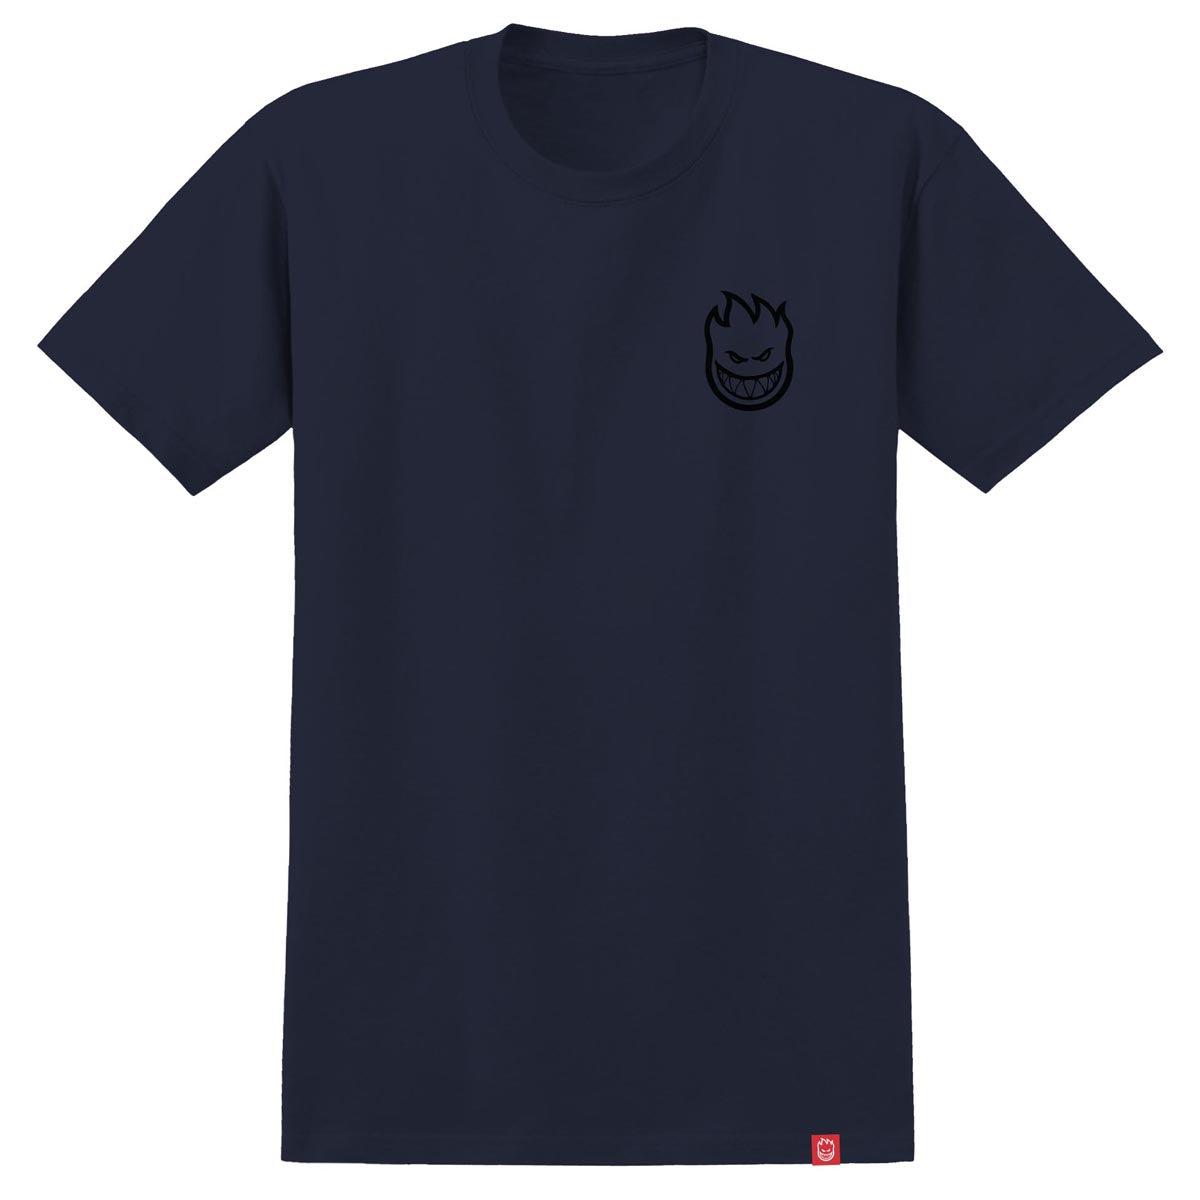 Spitfire Lil Bighead T-Shirt - Navy/Black image 1